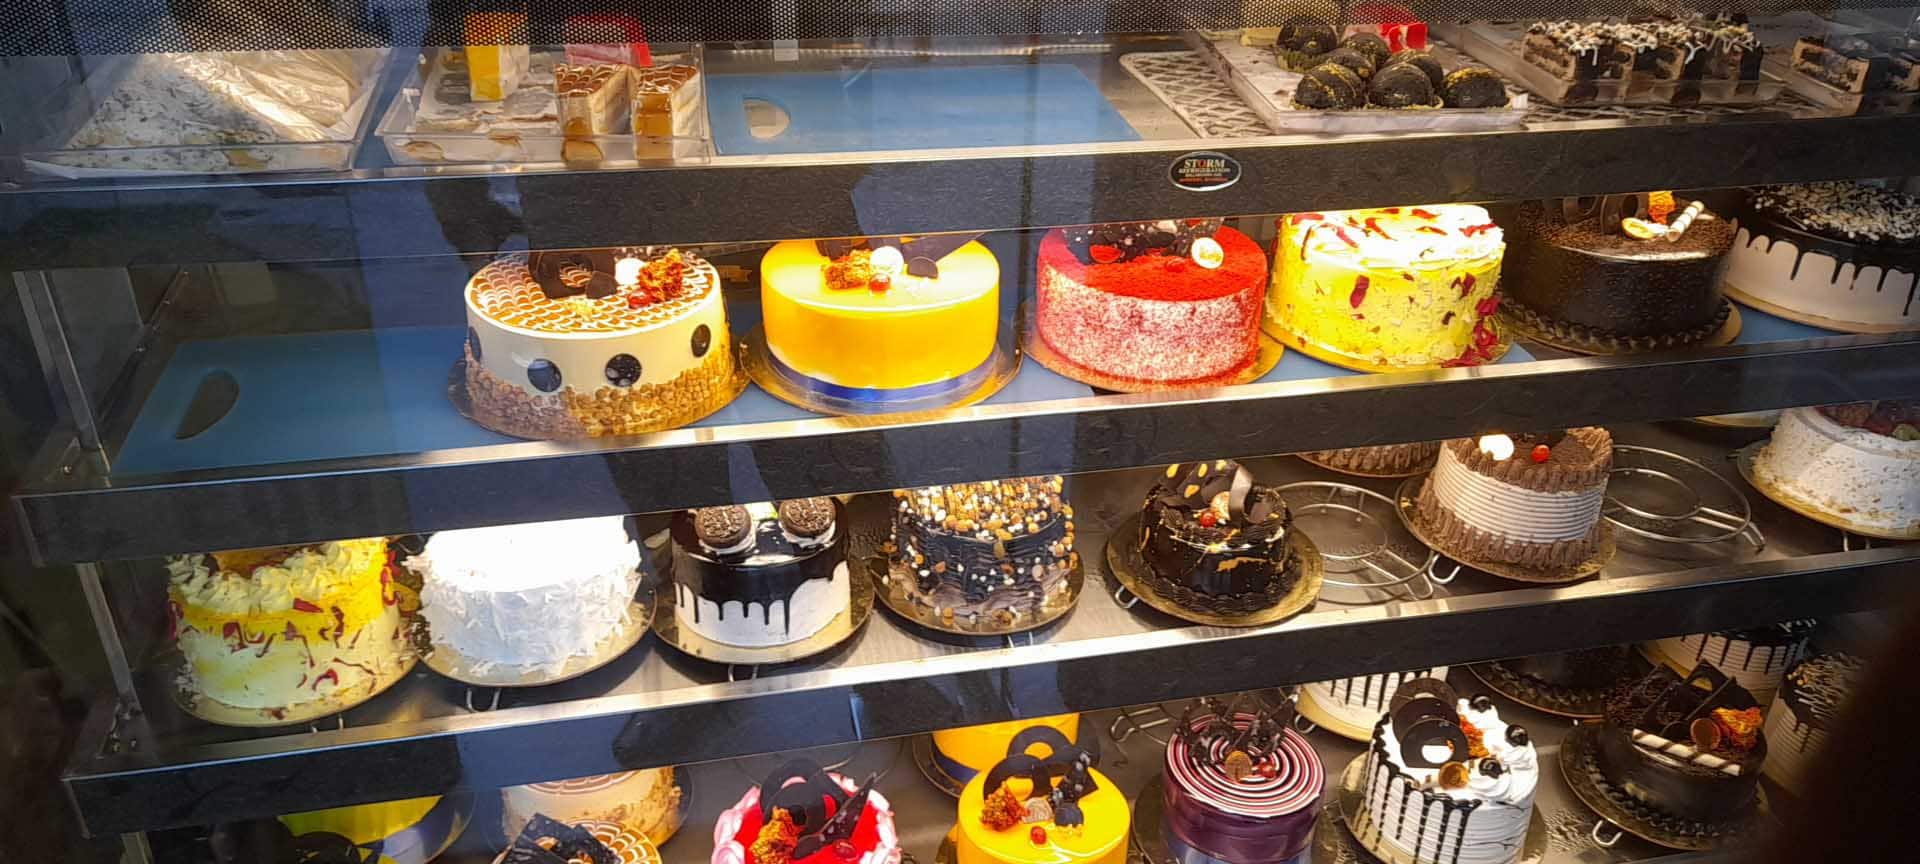 Setia cake o'clock, Faridabad - Restaurant reviews